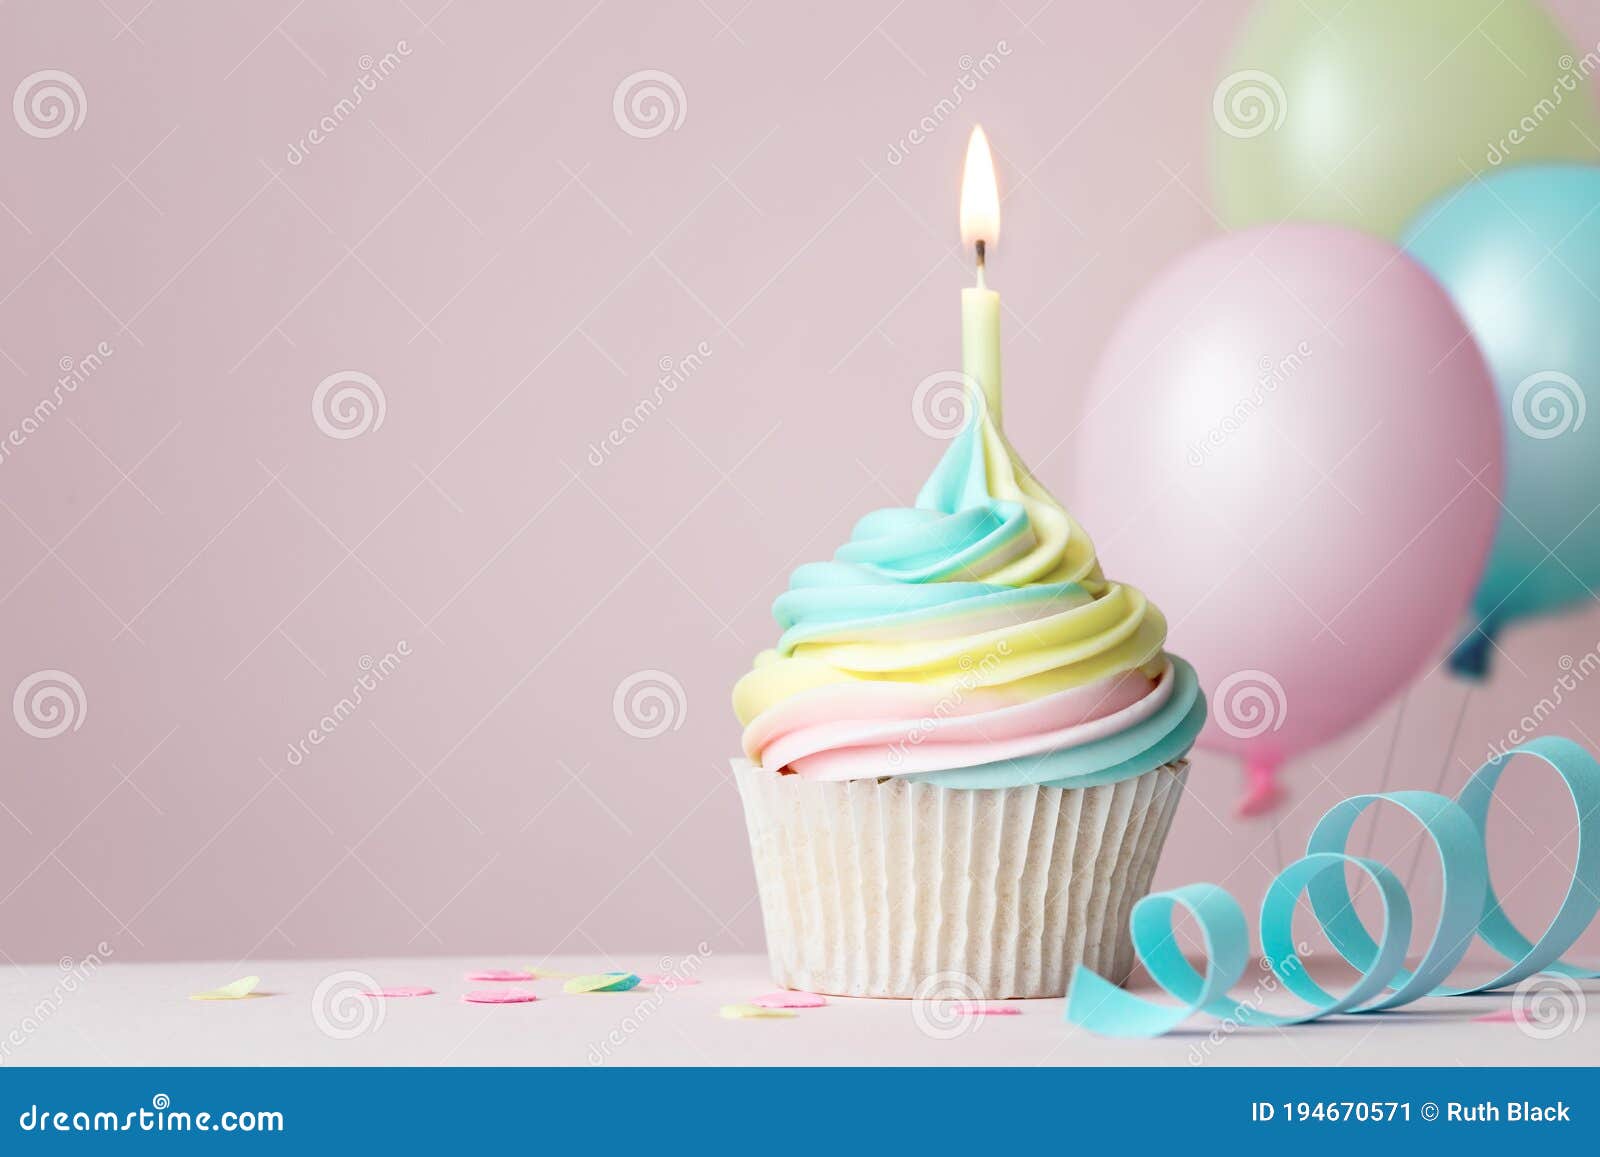 Rainbow Birthday Cupcake Stock Image. Image Of Background - 194670571